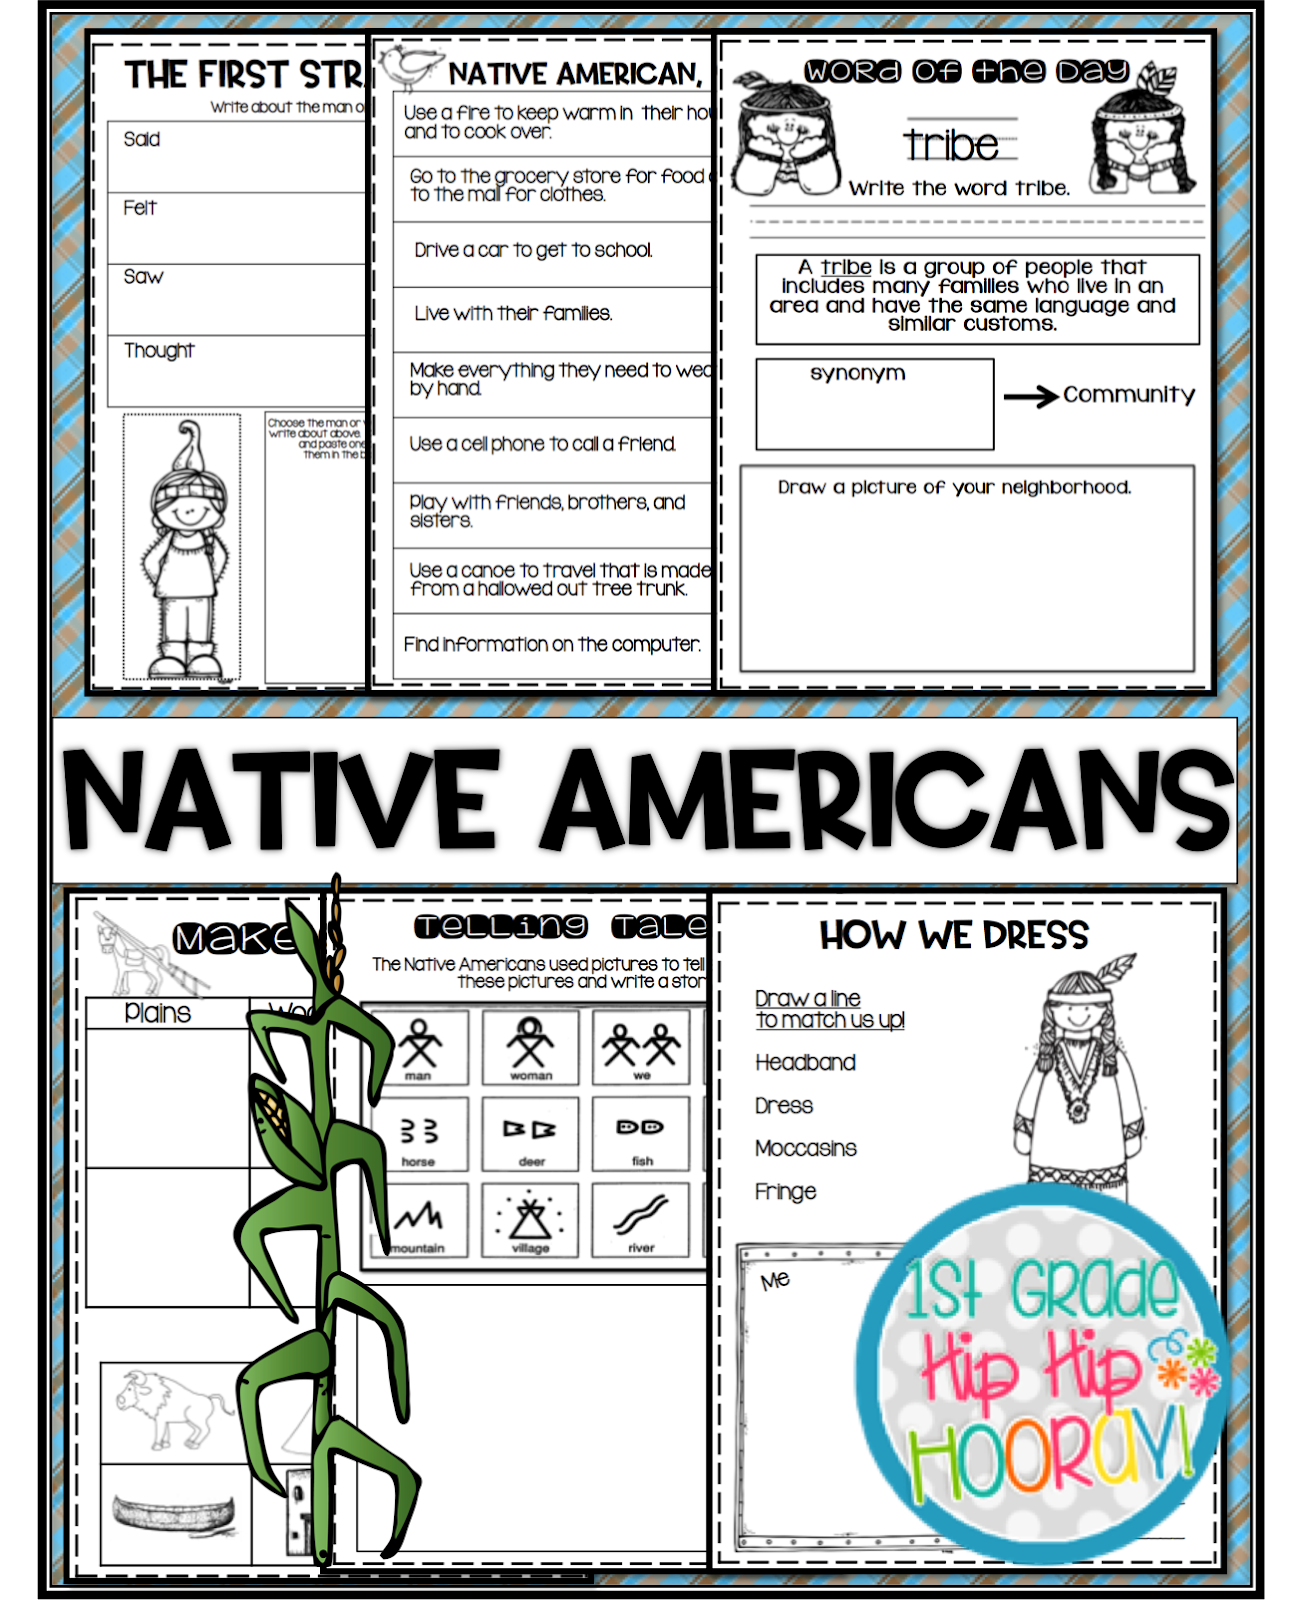 1st Grade Hip Hip Hooray!: Native Americans...Informational Text